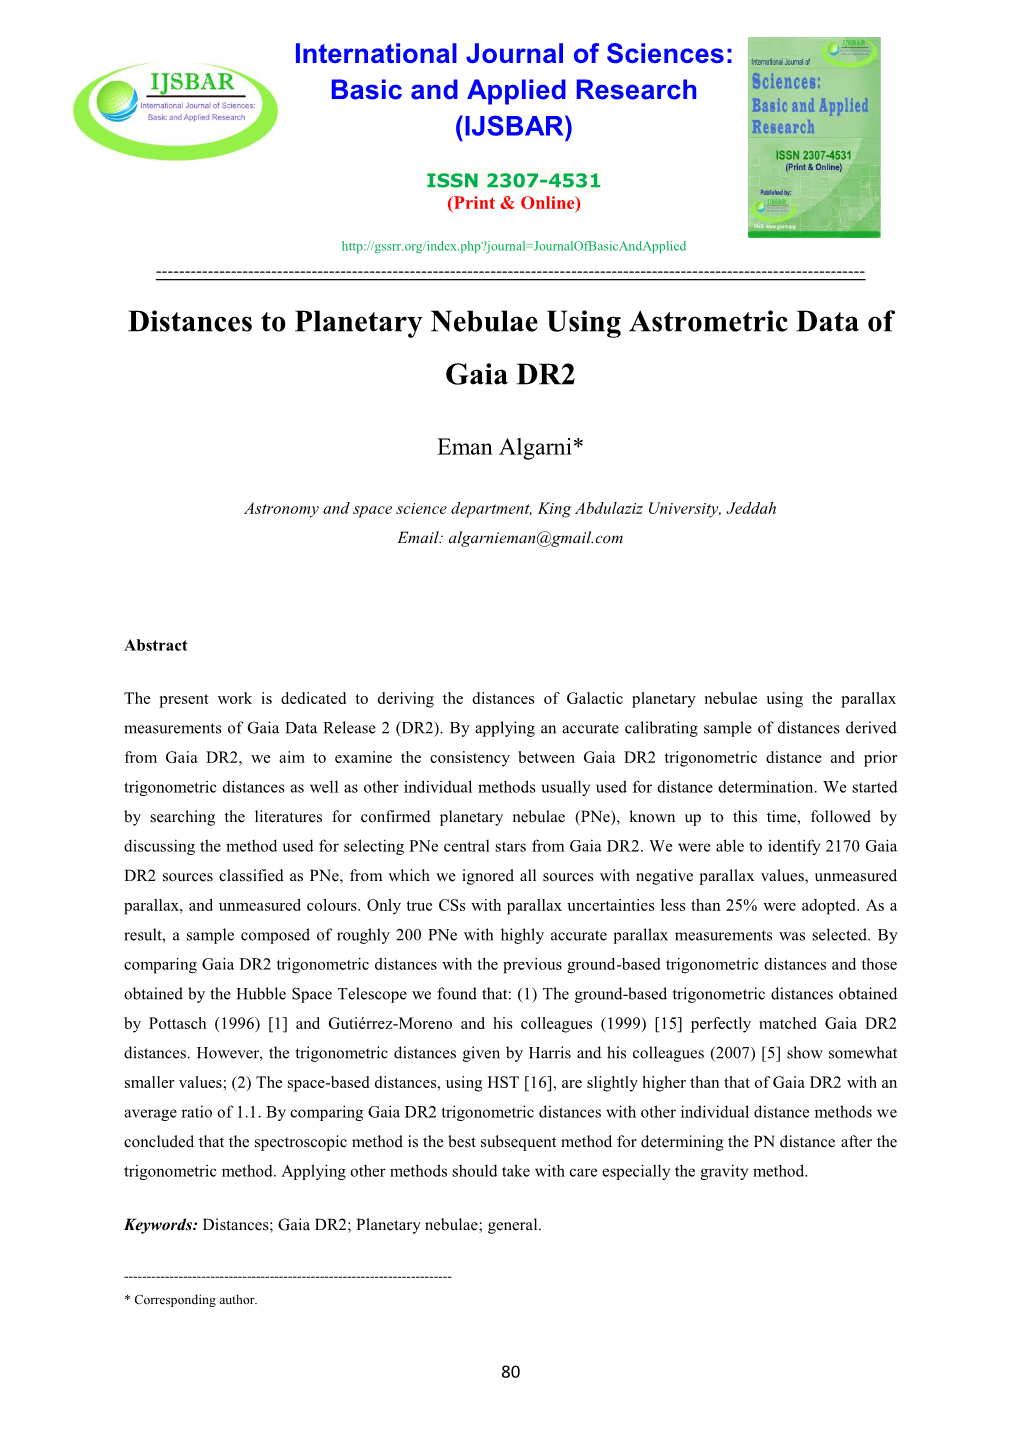 Distances to Planetary Nebulae Using Astrometric Data of Gaia DR2